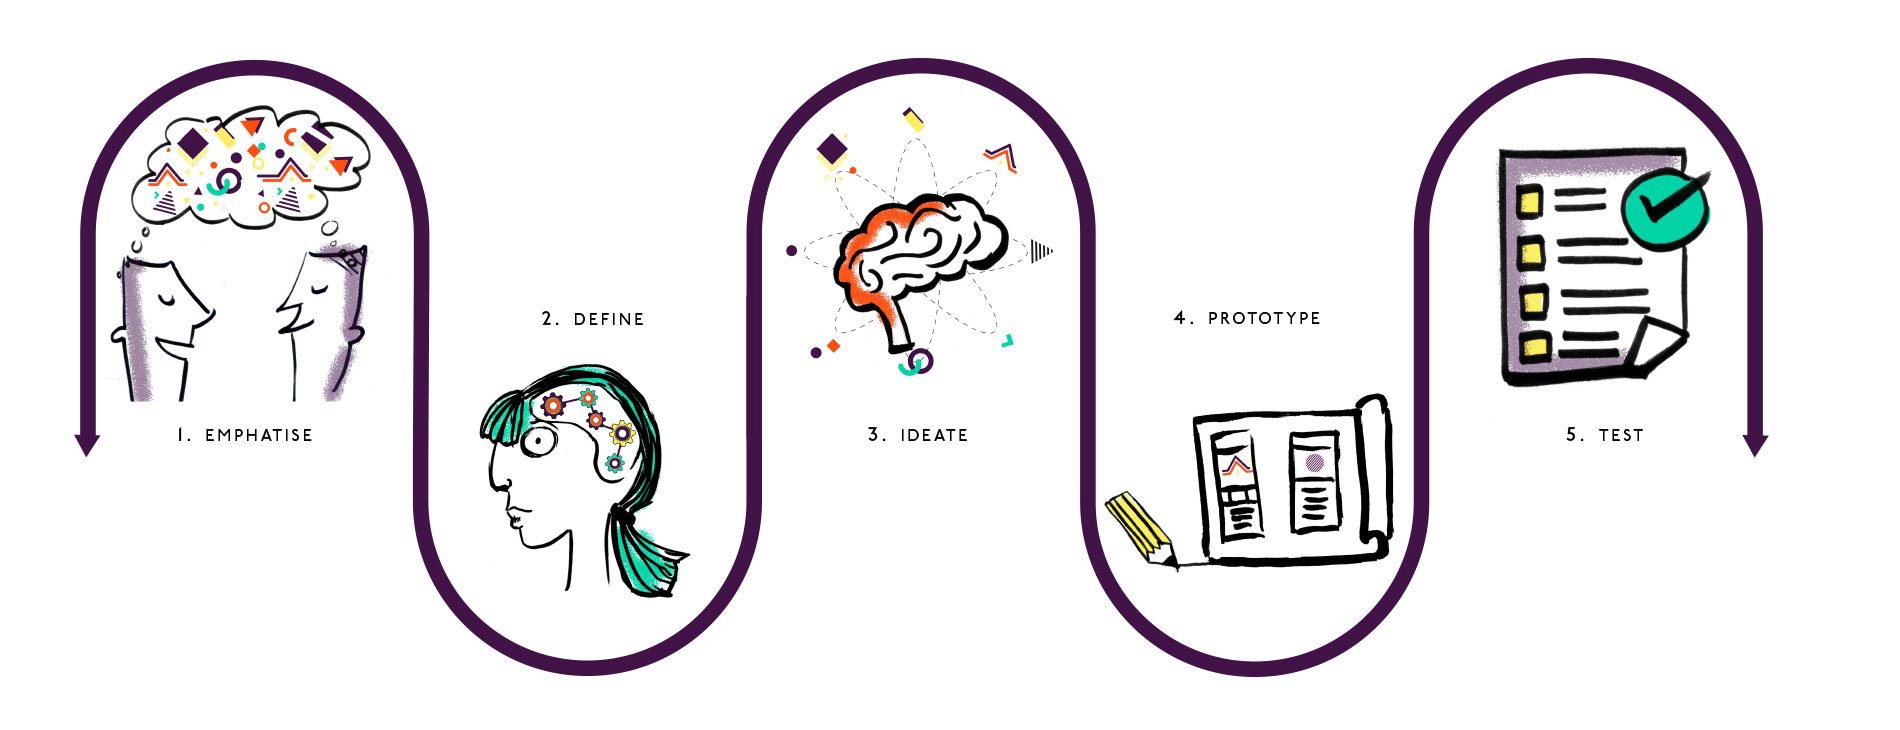 5 distinct phases of Design Thinking